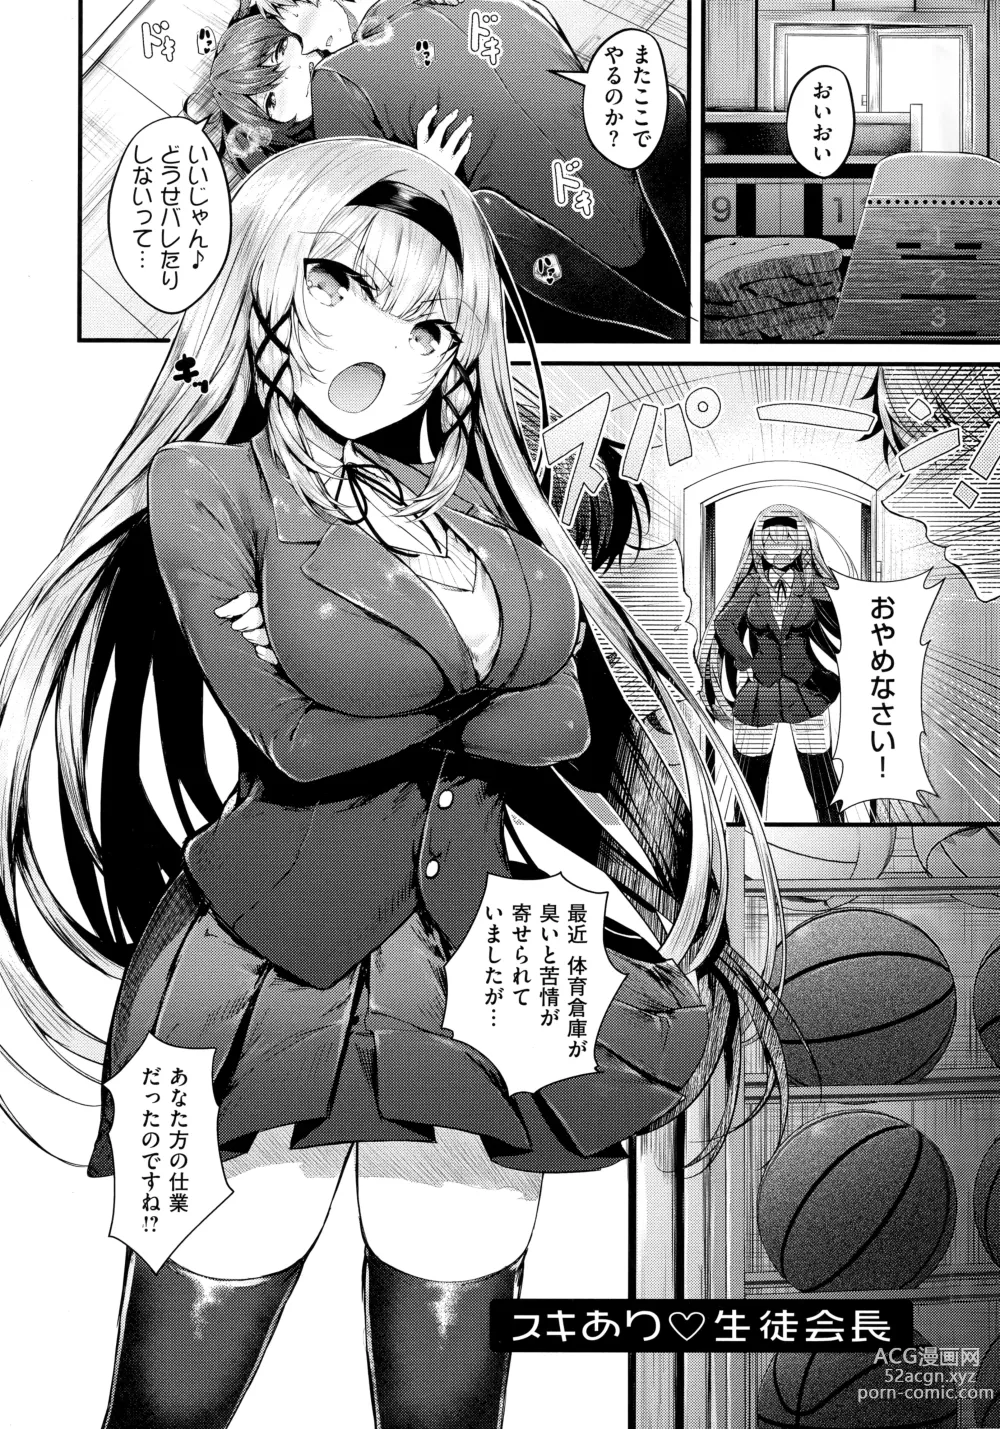 Page 7 of manga Namaiki Love Hole + Melonbooks Kounyu Tokuten + Toranoana Kounyu Tokuten